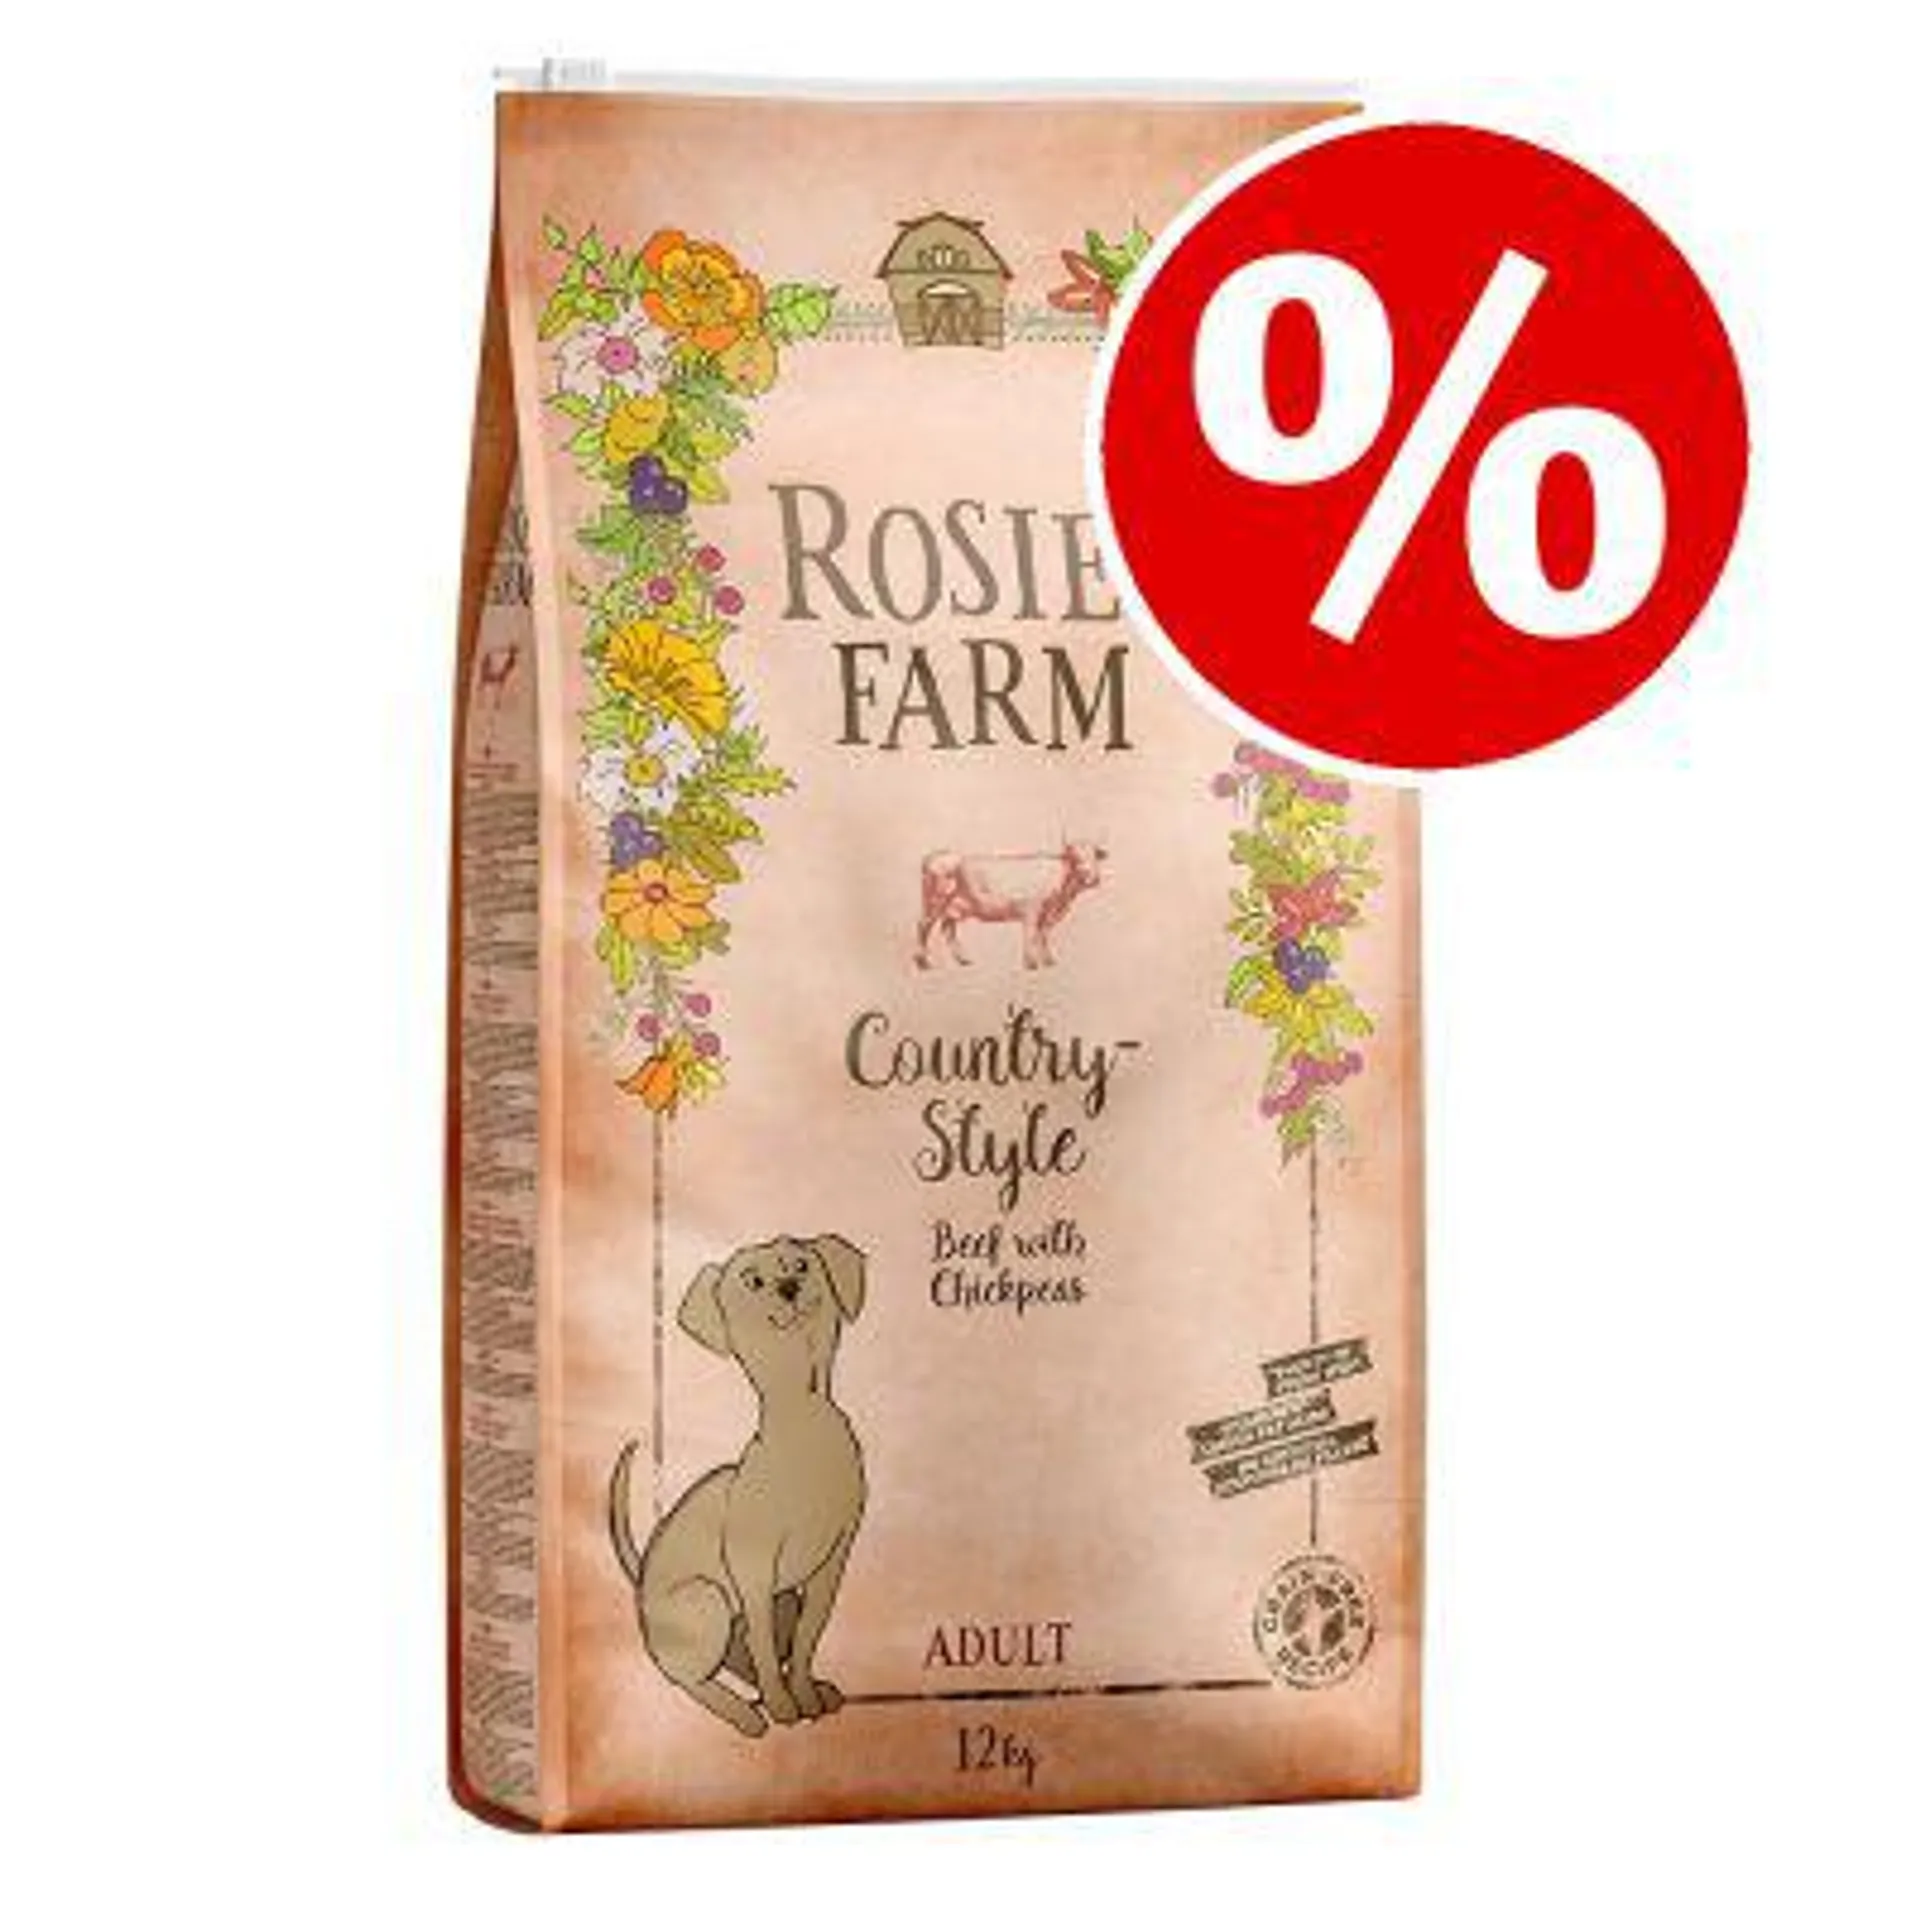 12kg Rosie's Farm Adult Dry Dog Food - Special Price!*